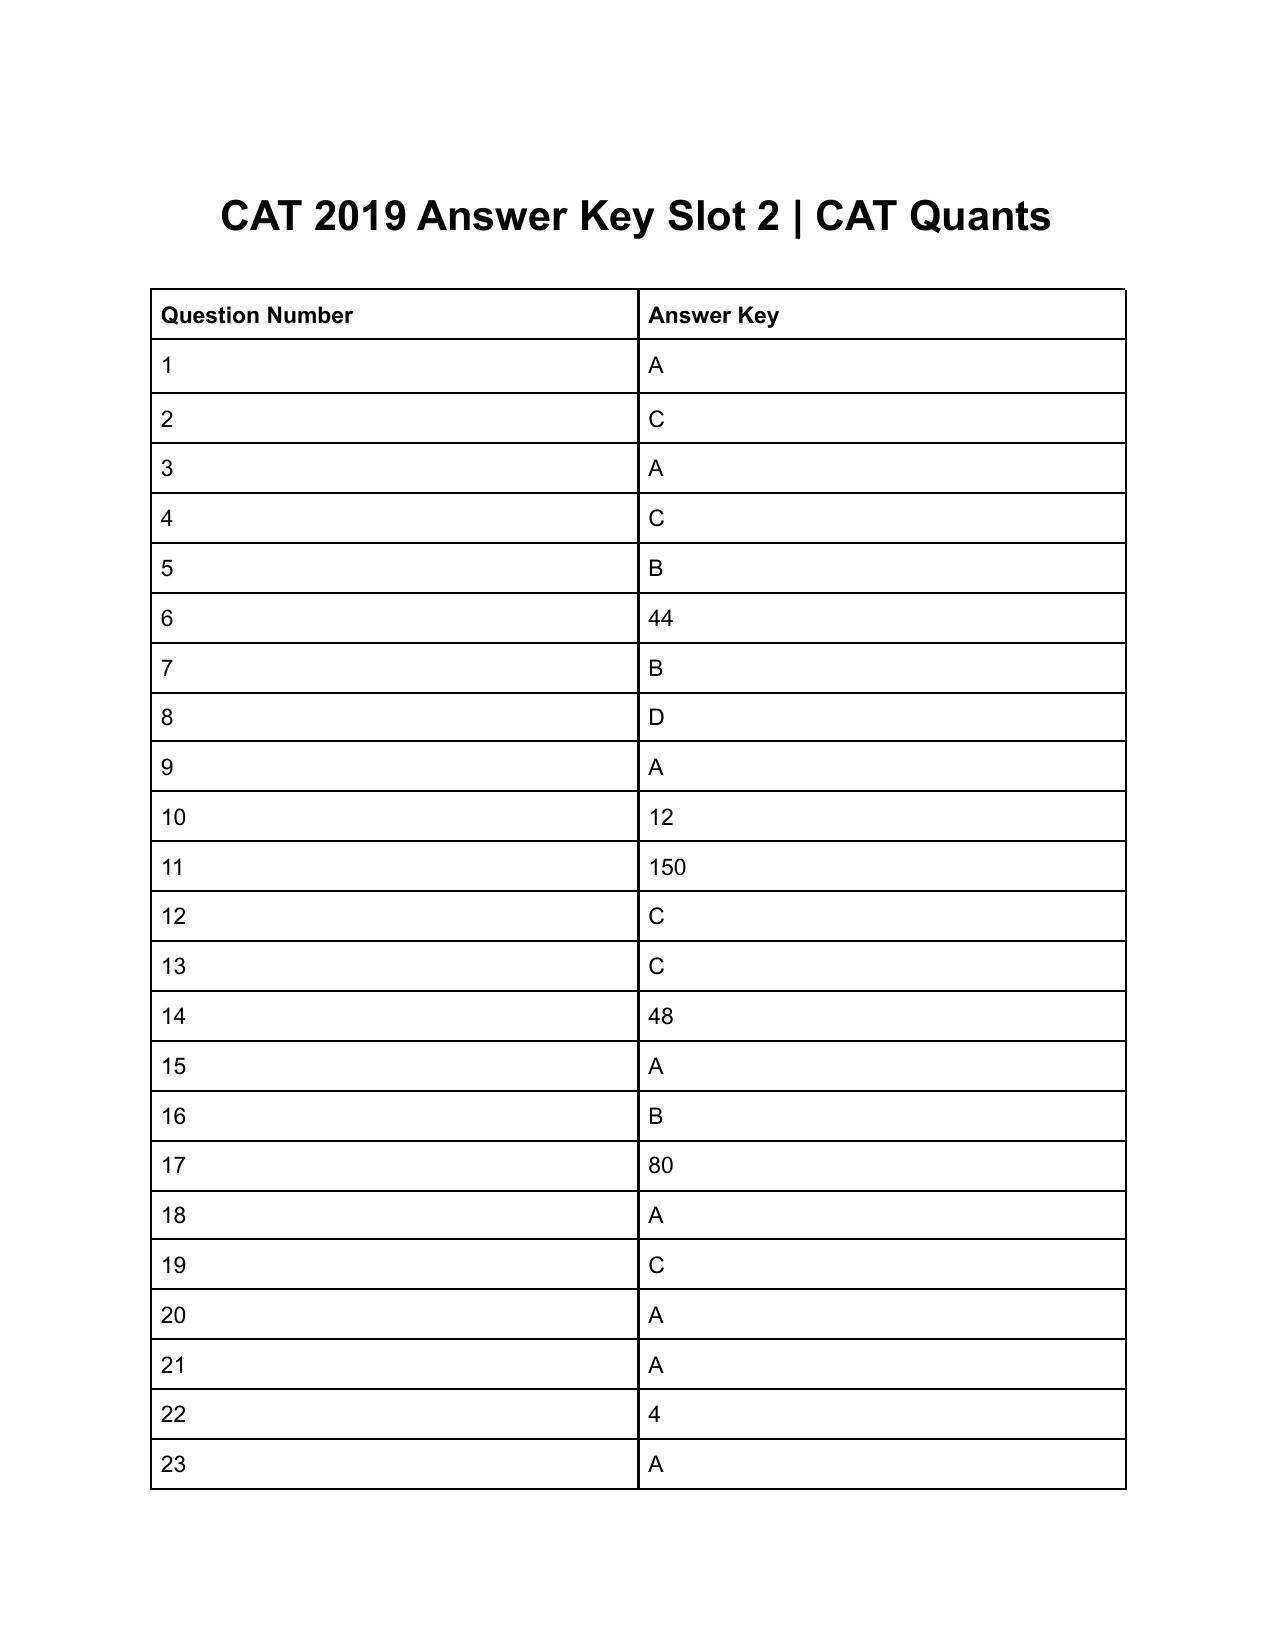 CAT 2019 CAT QA Slot 2 Answer Key - Page 1